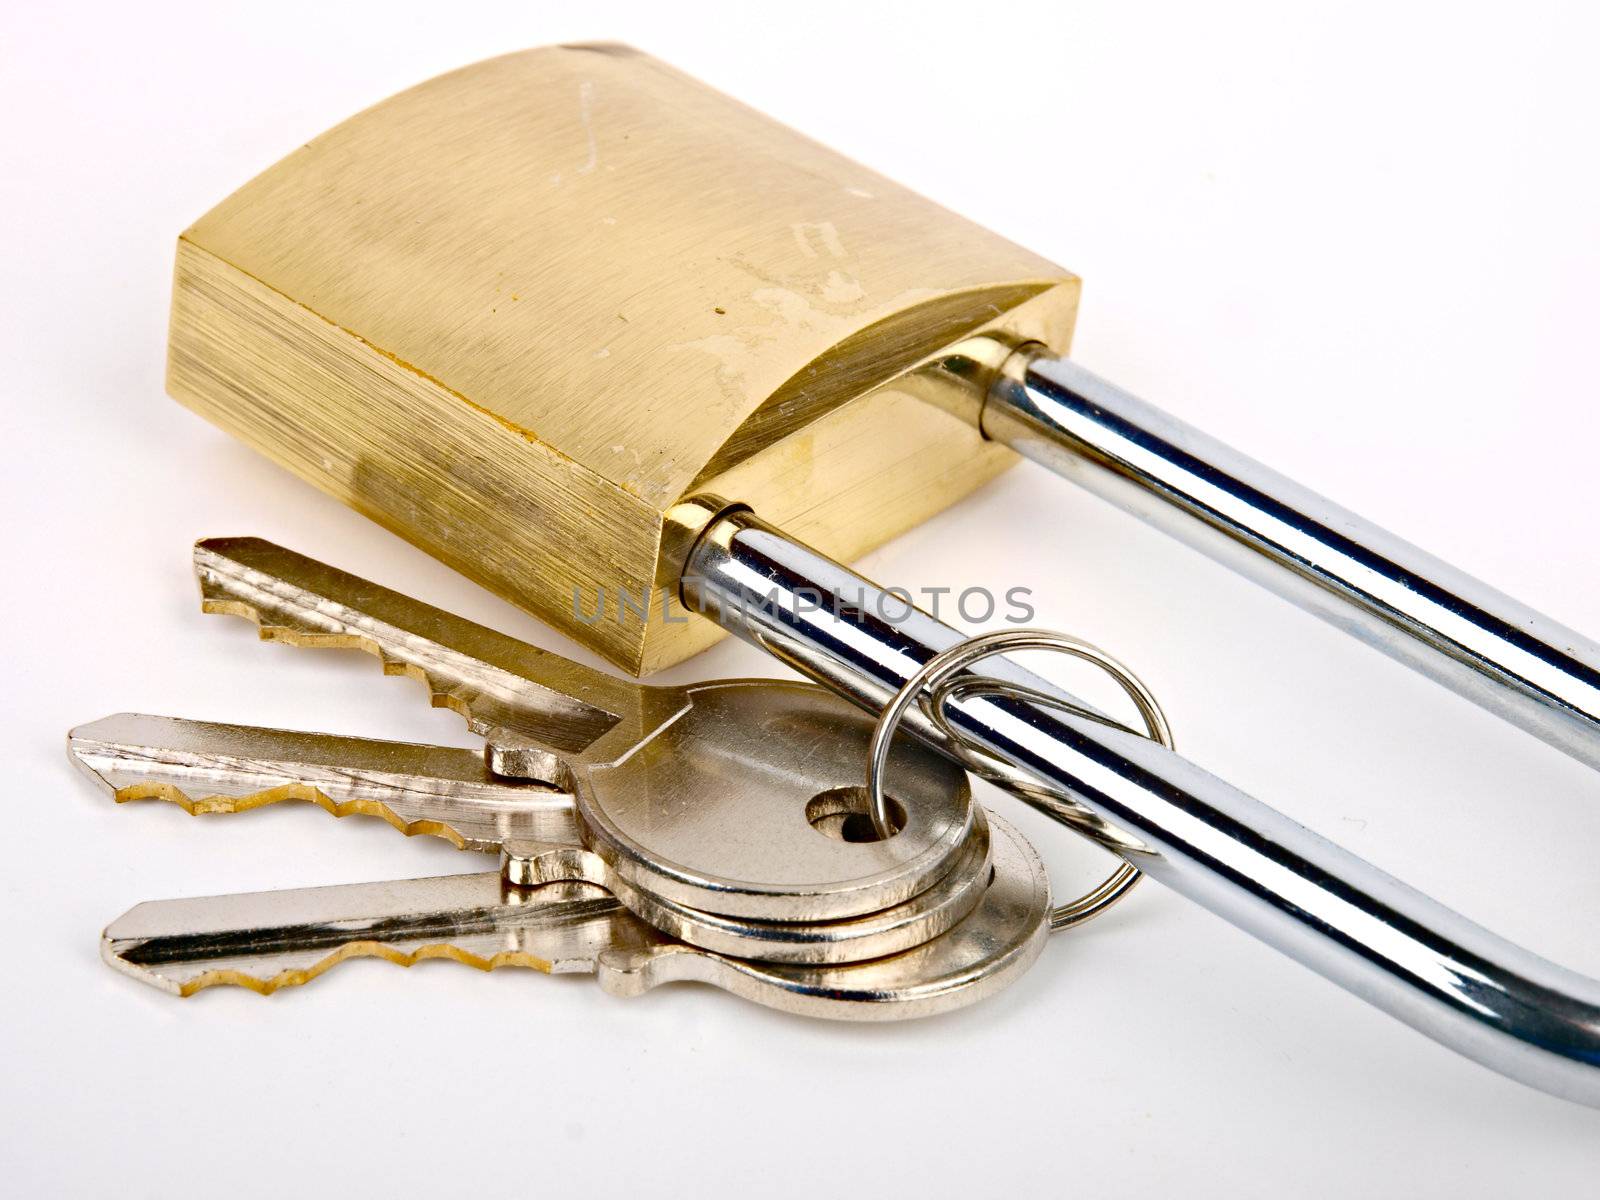 Padlock with keys